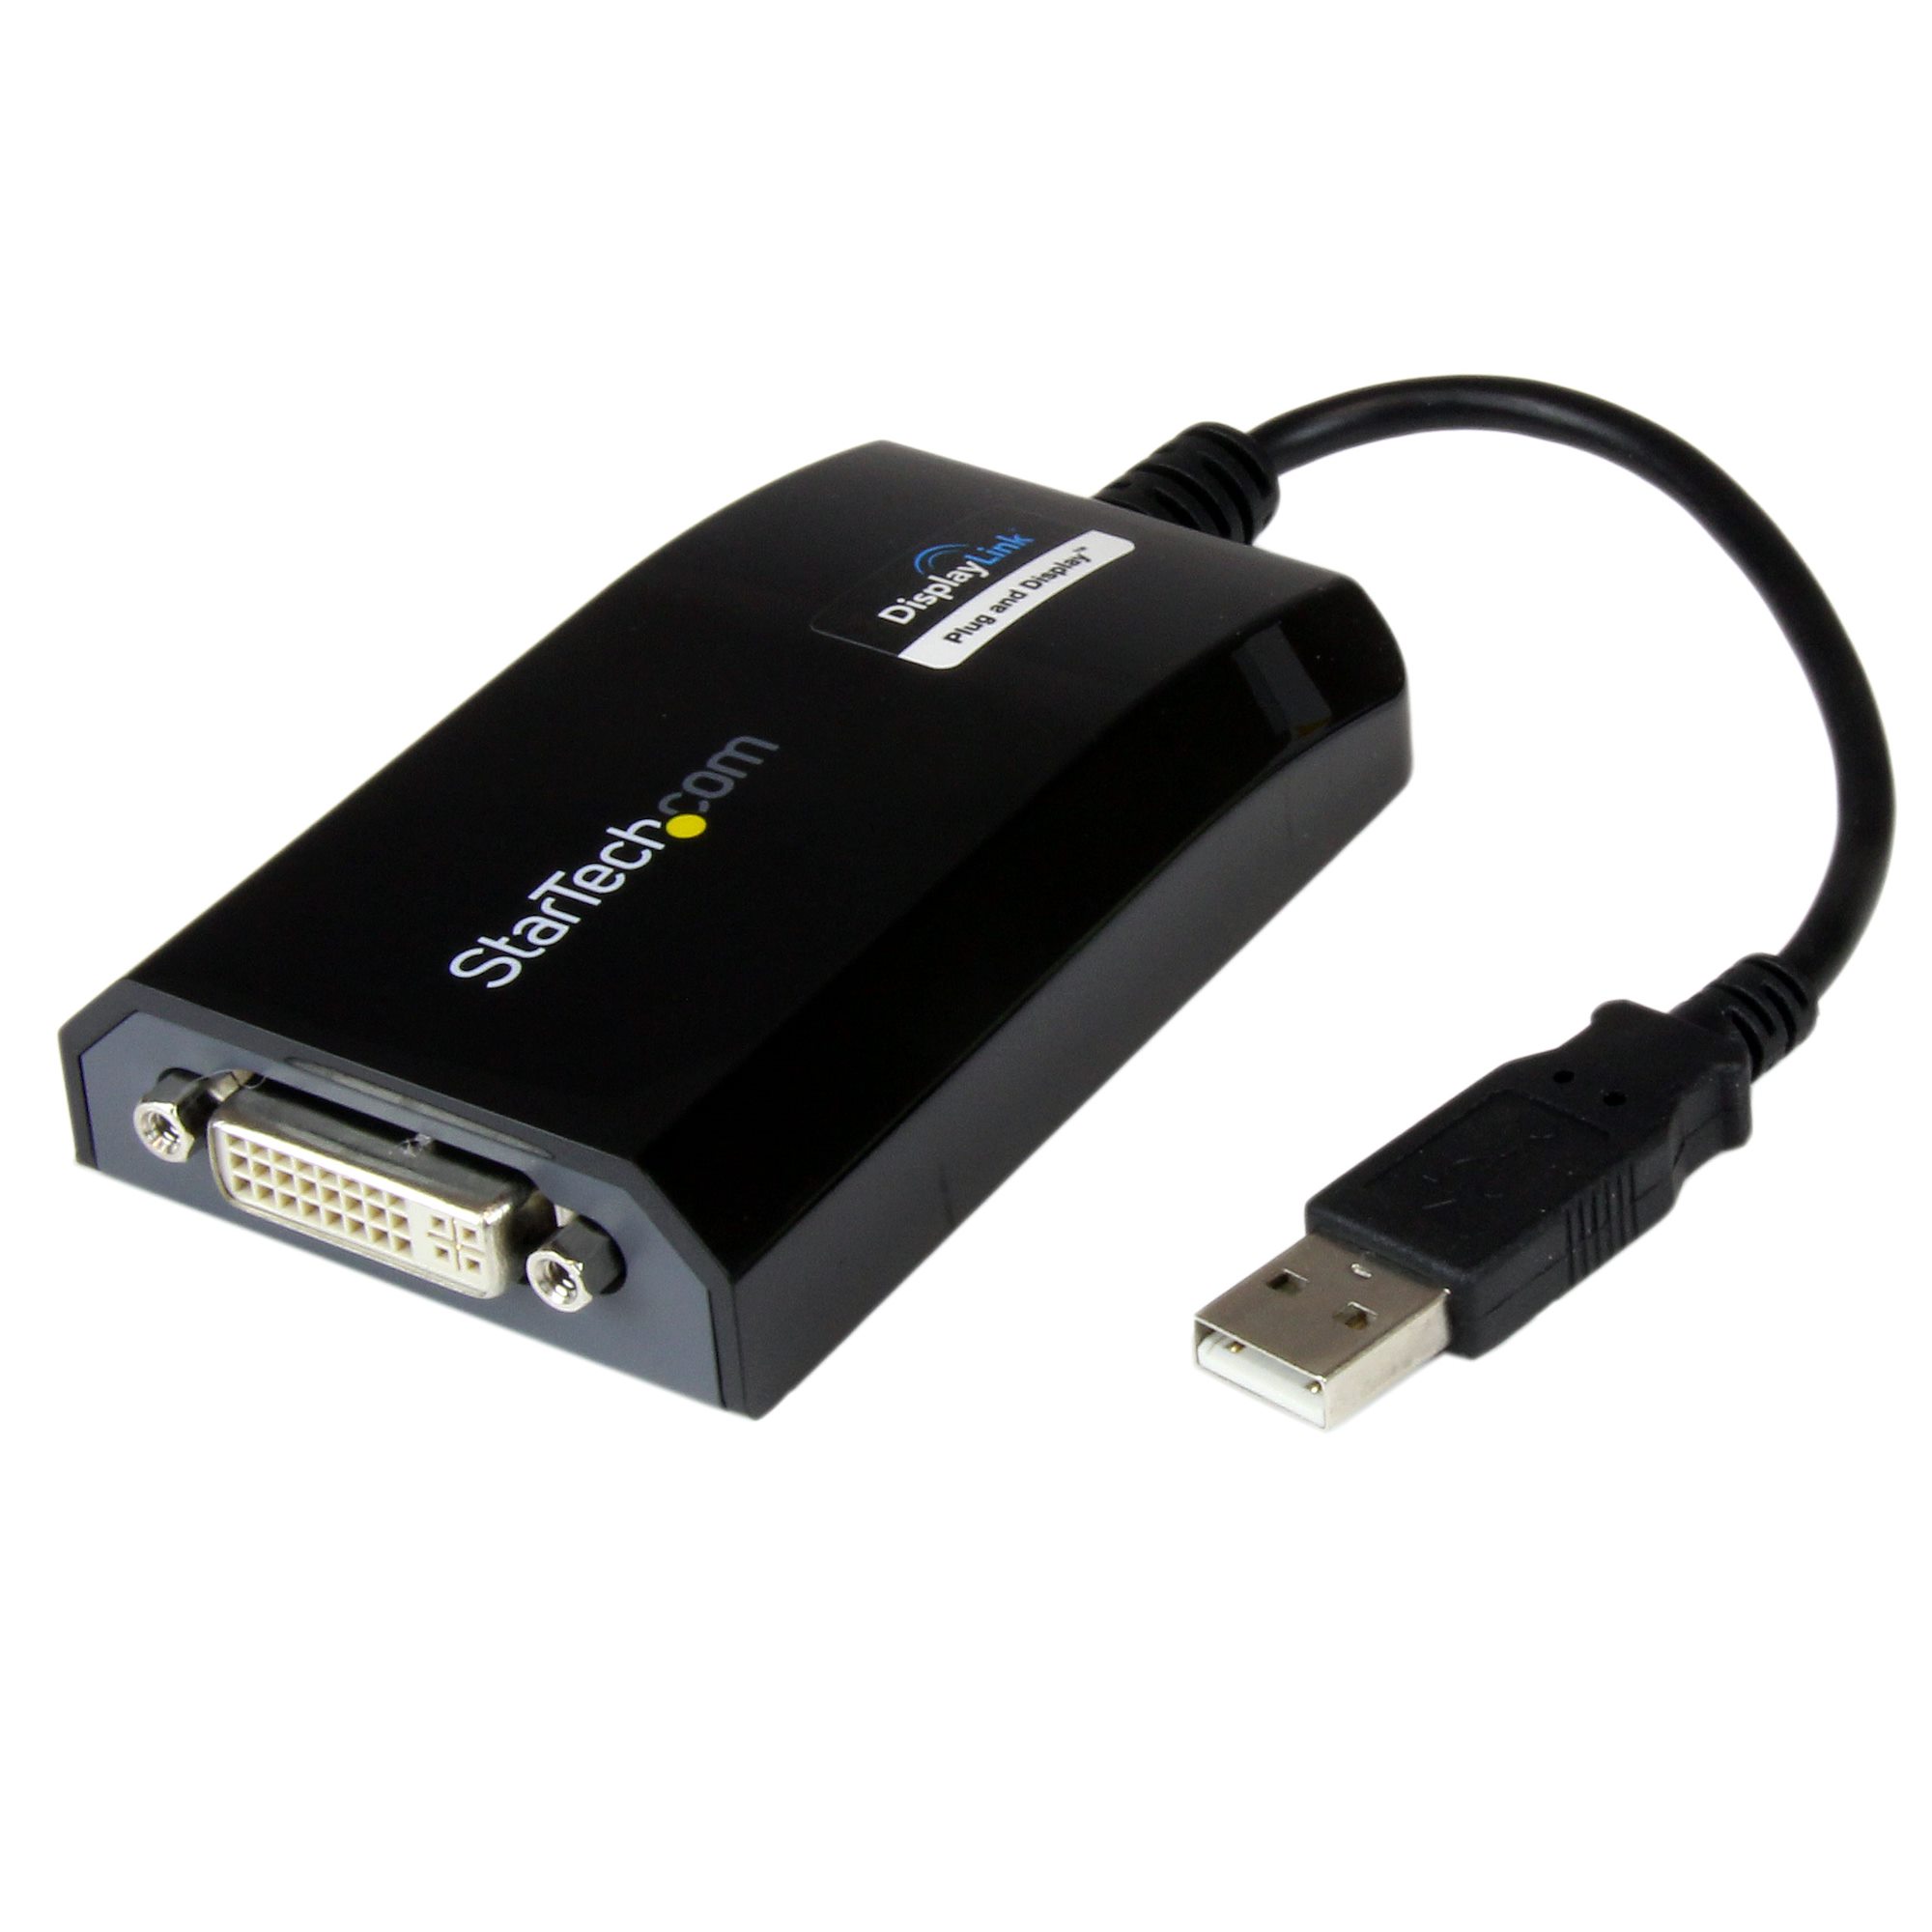 StarTech.com 6' HDMI to DVI-D Video Cable Black HDMIDVIMM6 - Best Buy